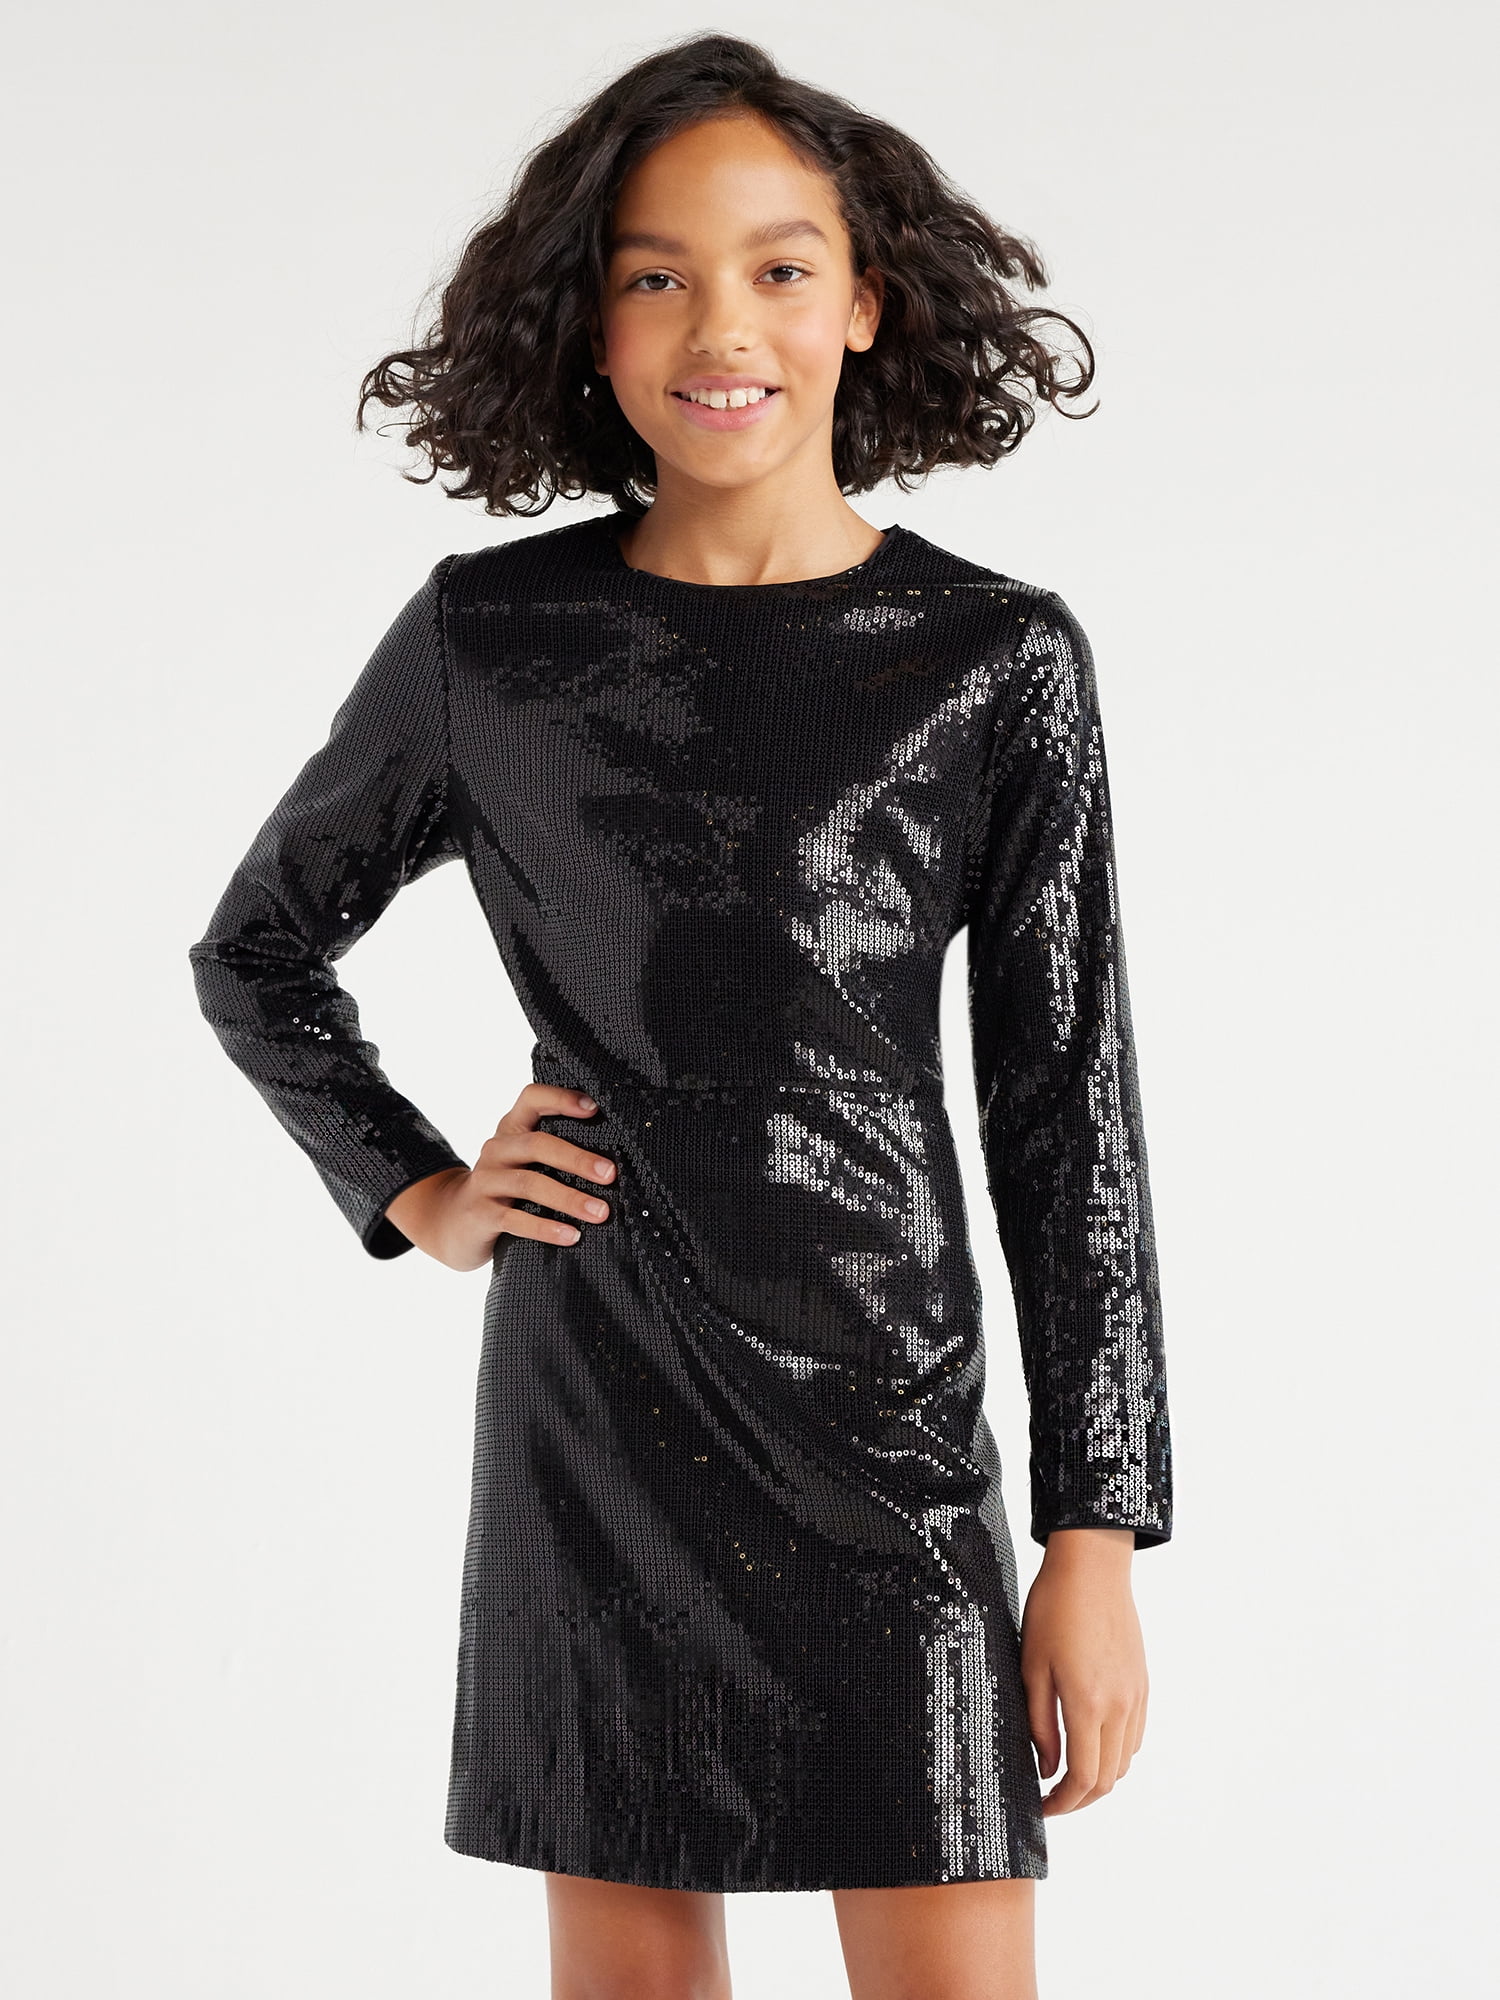 Scoop Girls Sequin Dress with Long Sleeves, Sizes 4-18 - Walmart.com